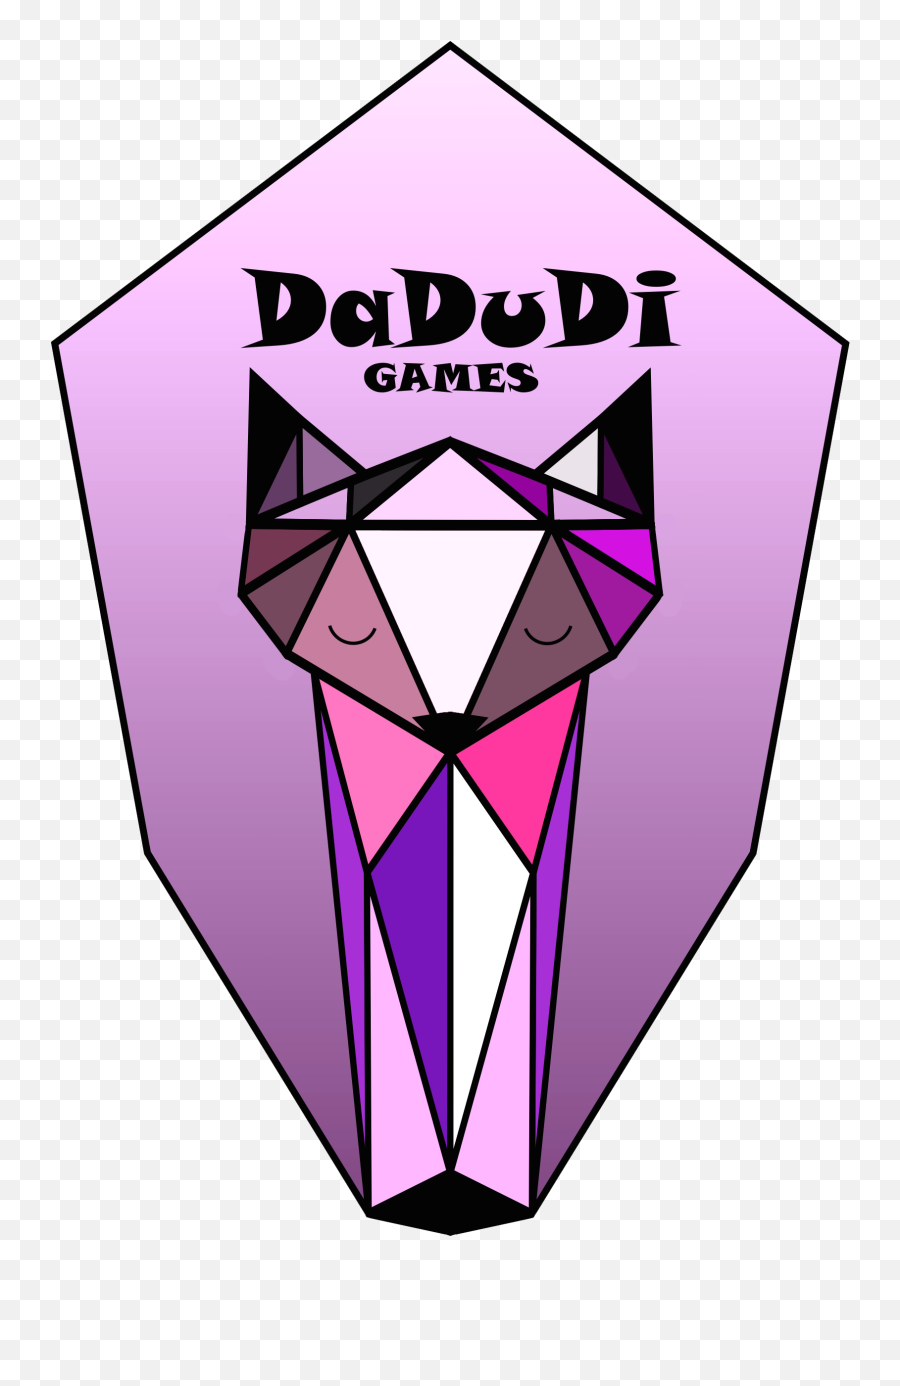 Dadudi Games - Solid Emoji,Logo Games For Kids